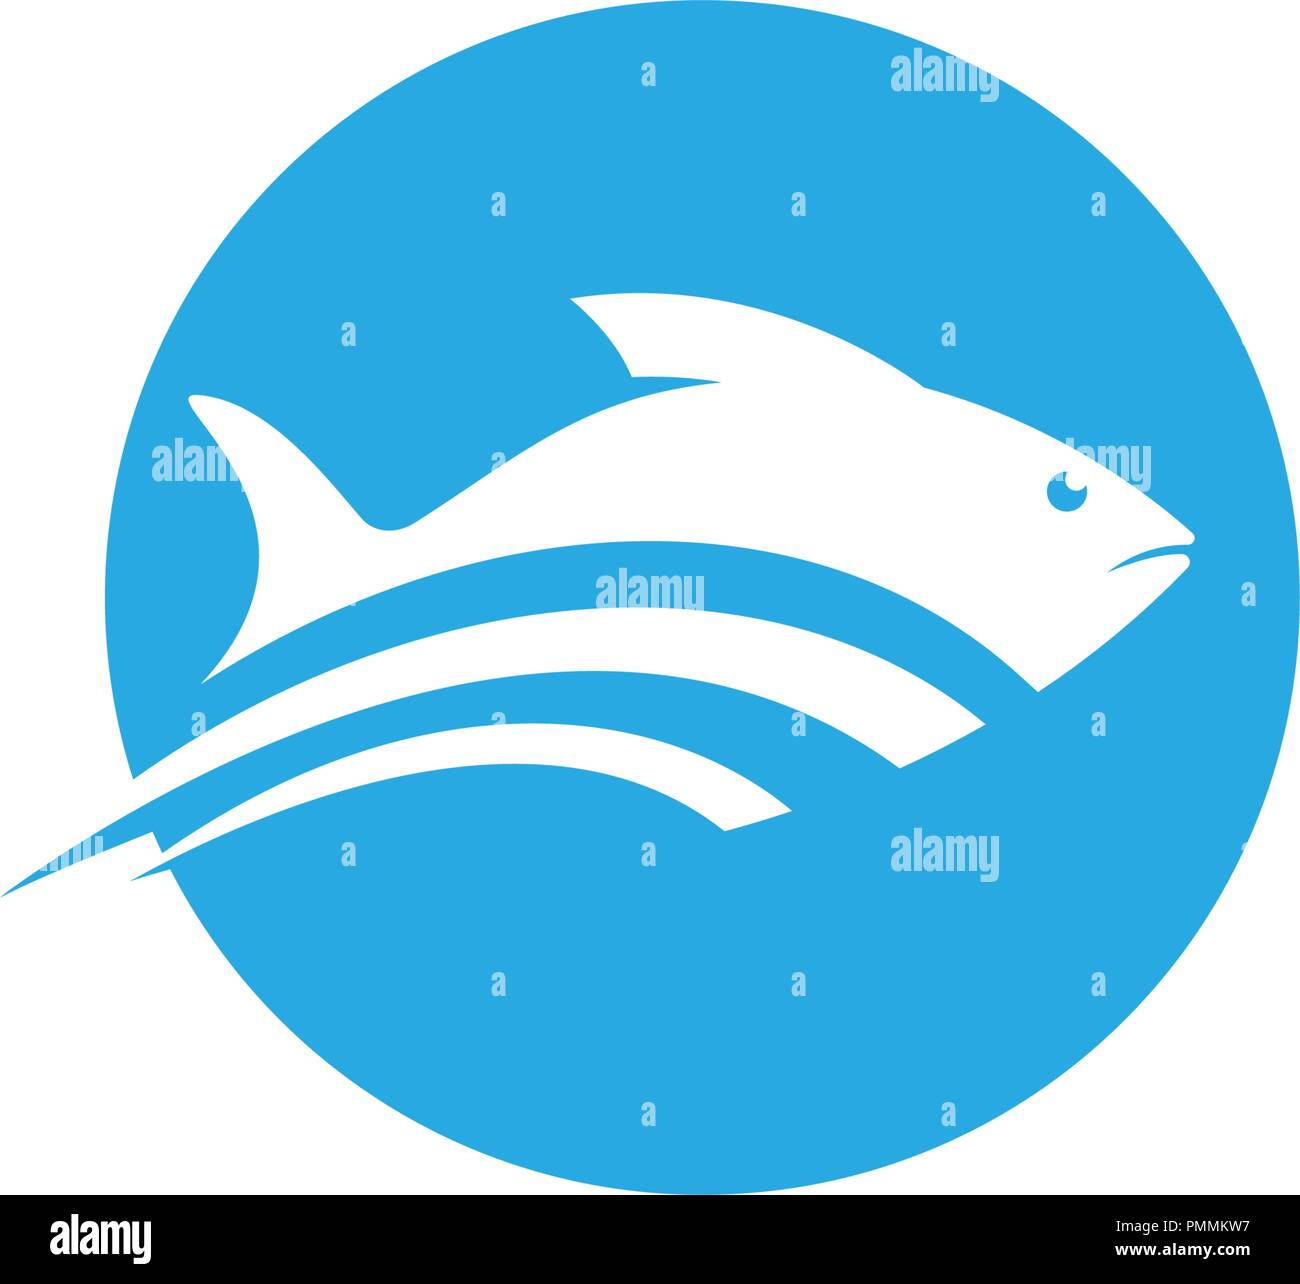 Fisch logo Vorlage kreative Vektor Symbol Stock Vektor